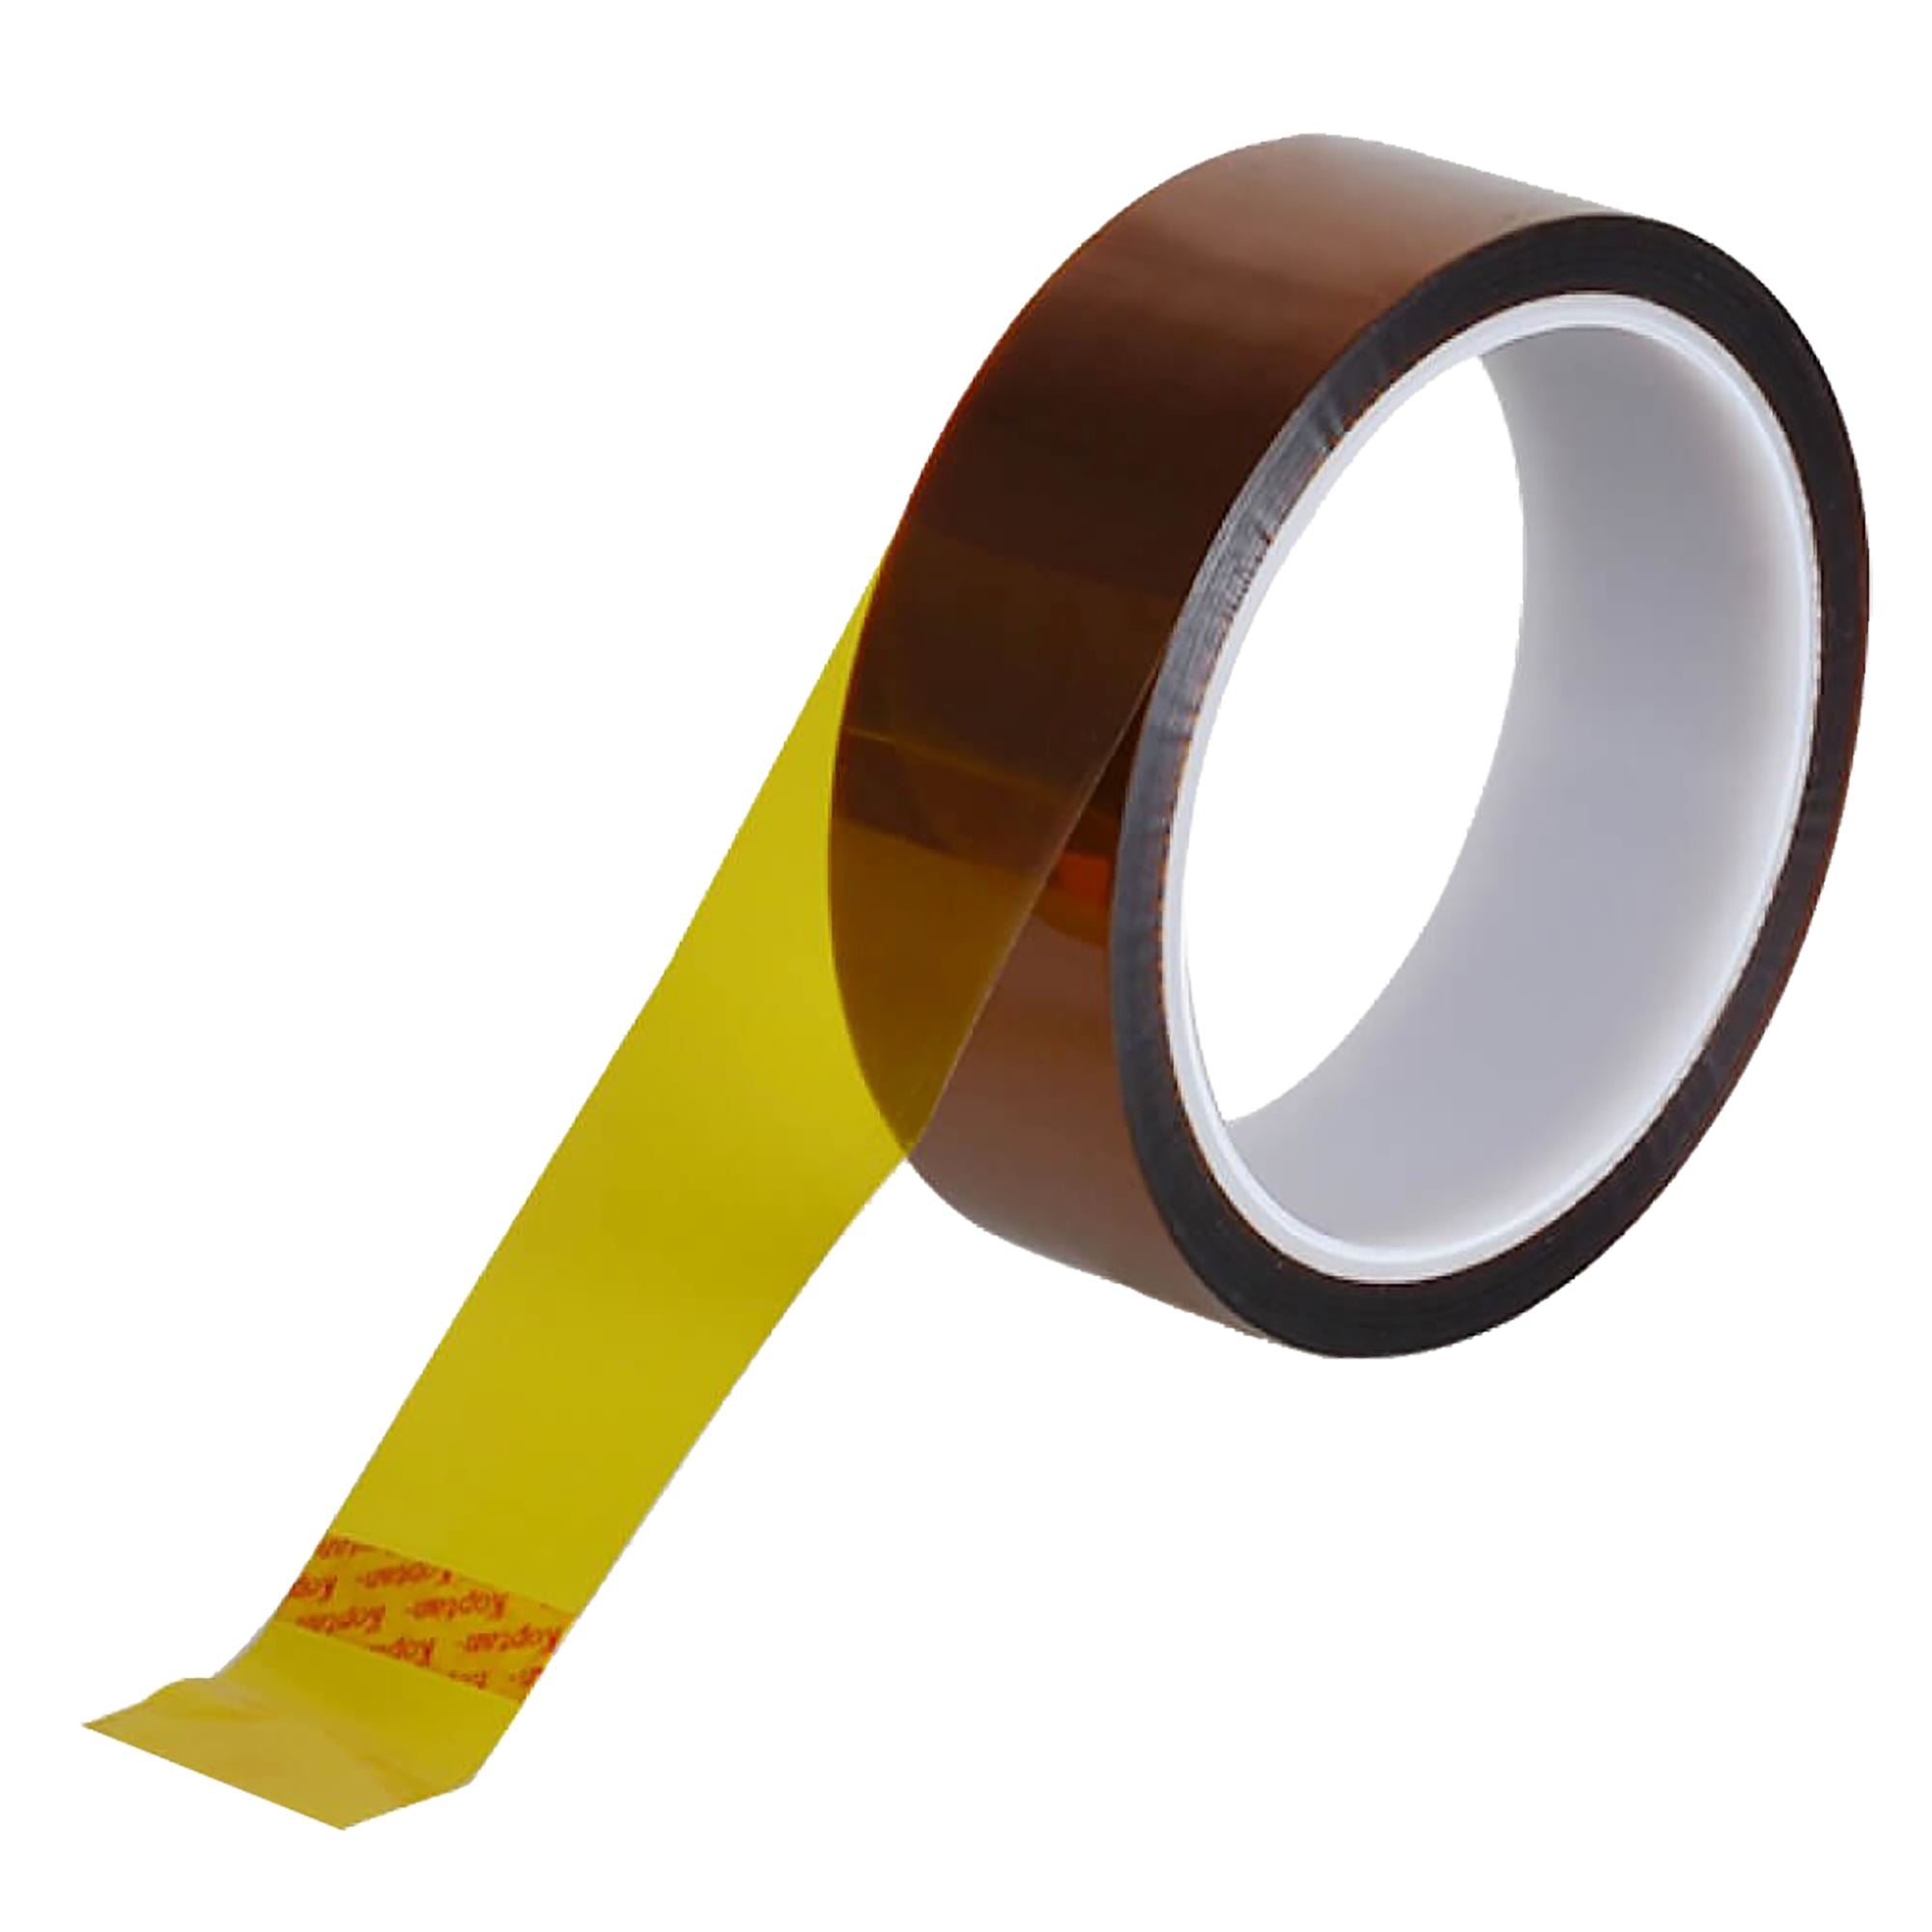 ProSub High Temperature Heat Resistant Tape - 1in x 108ft